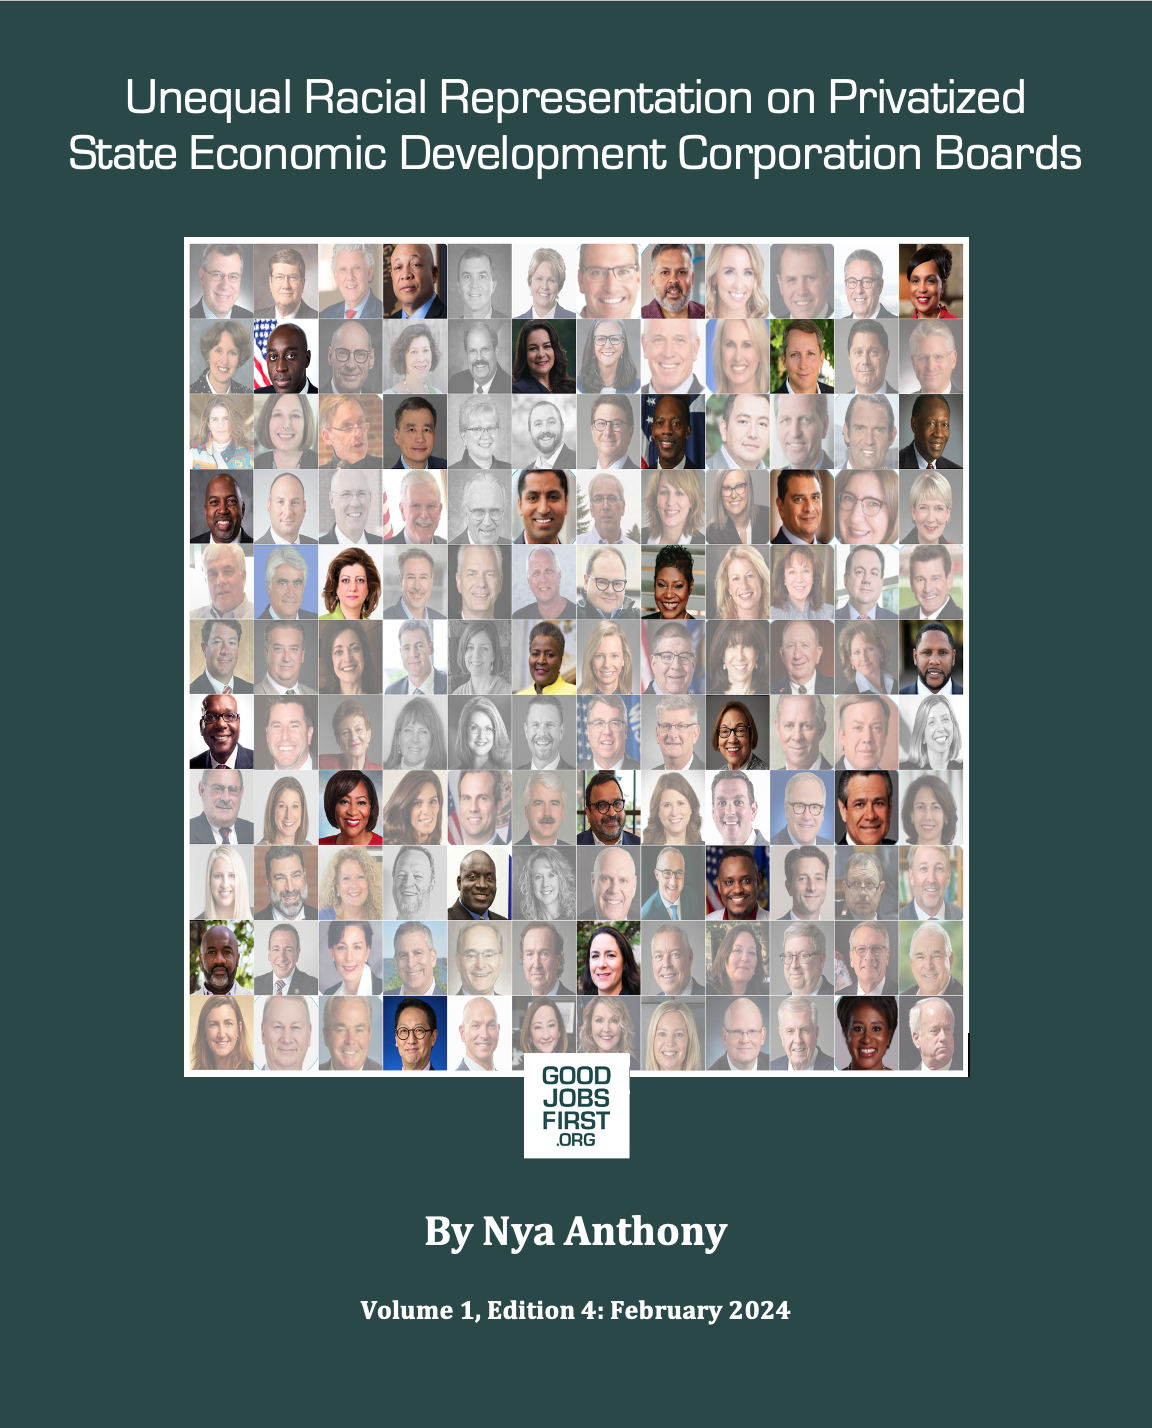 Unequal Racial Representation on Privatized State Economic Development Corporation Boards